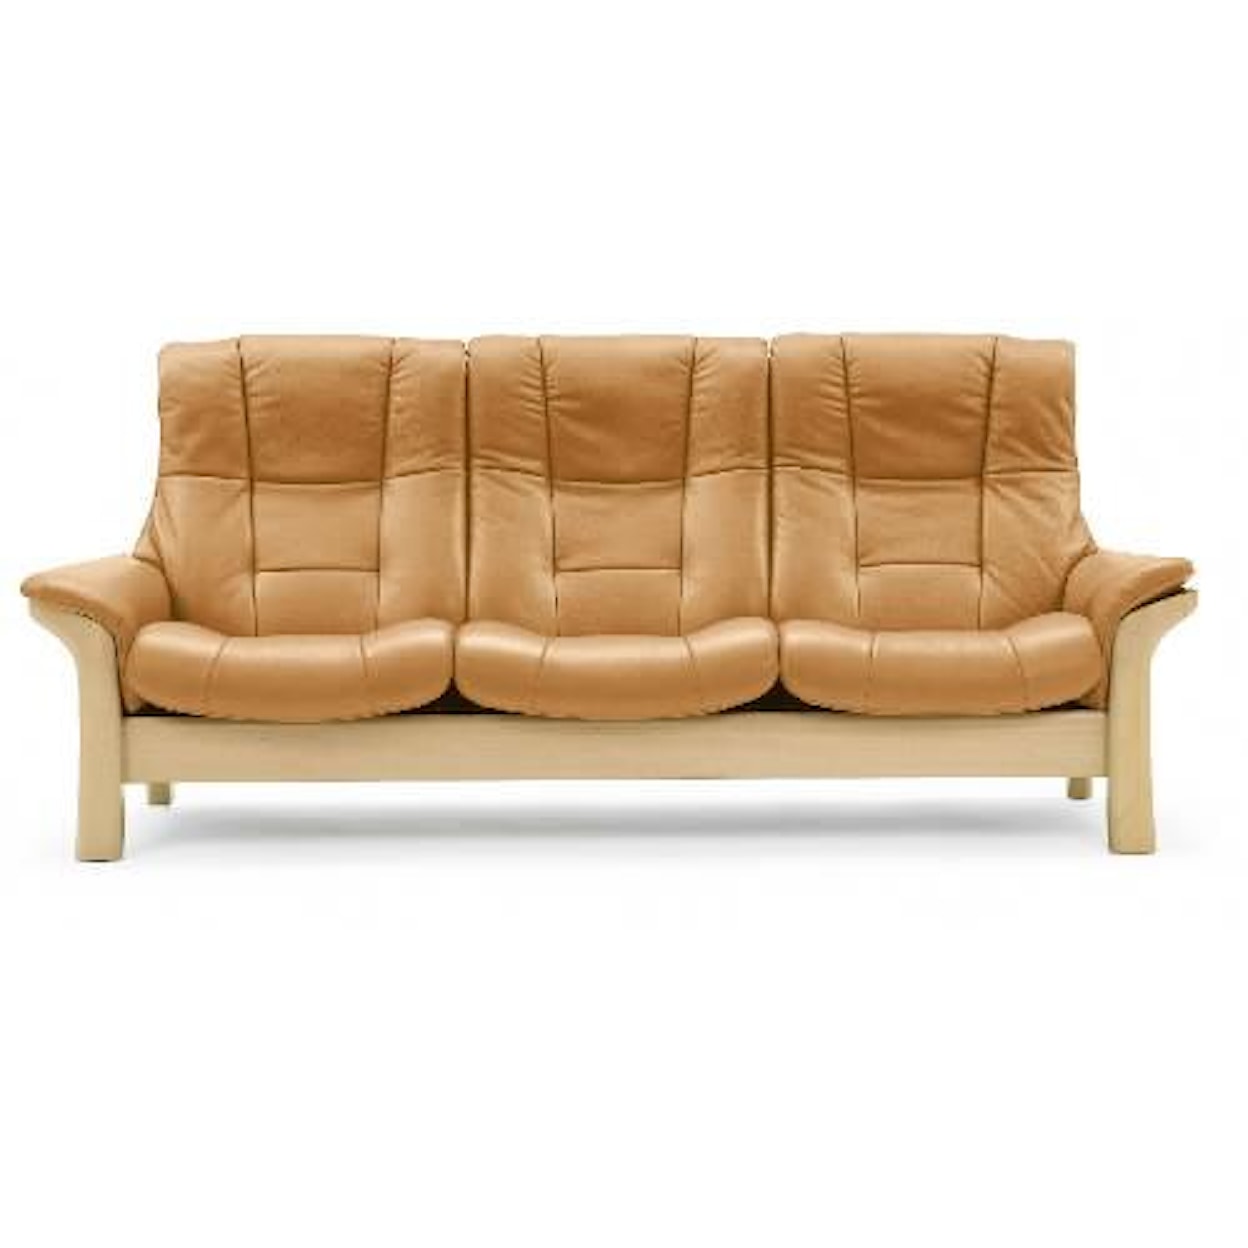 Stressless by Ekornes Buckingham High-Back 3-Seater Reclining Sofa